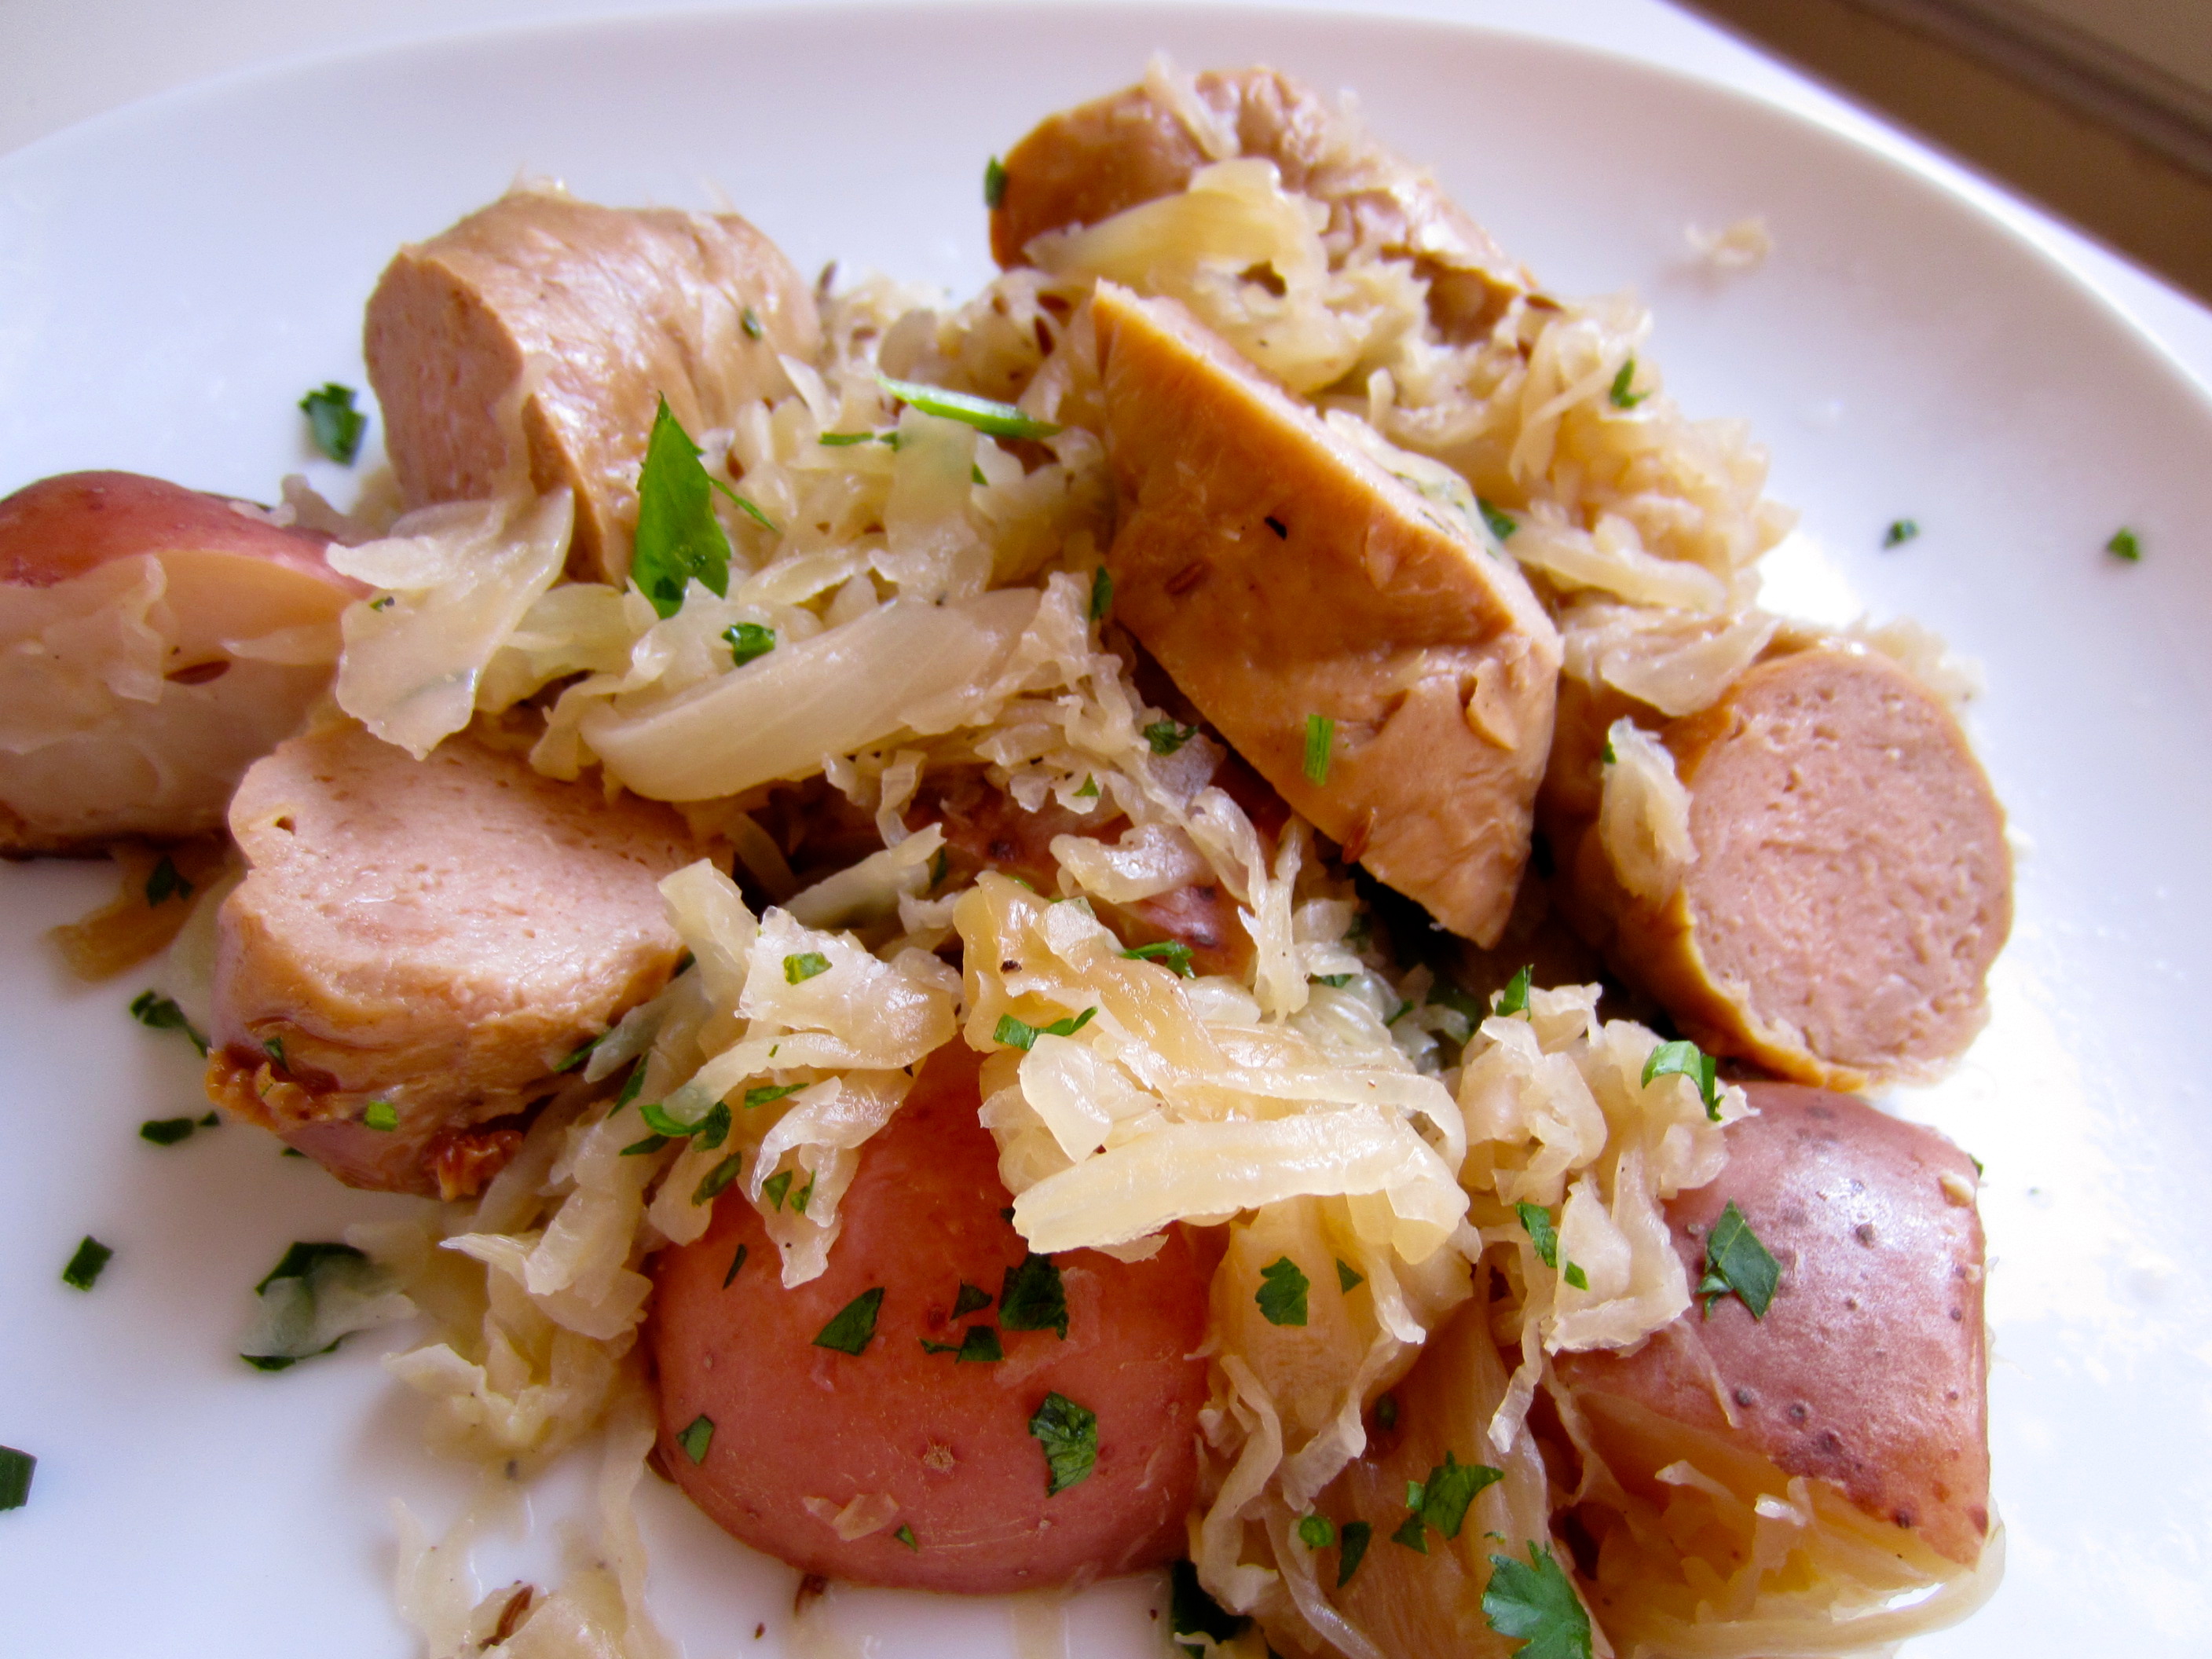 Crock pot bratwurst with potatoes and sauerkraut